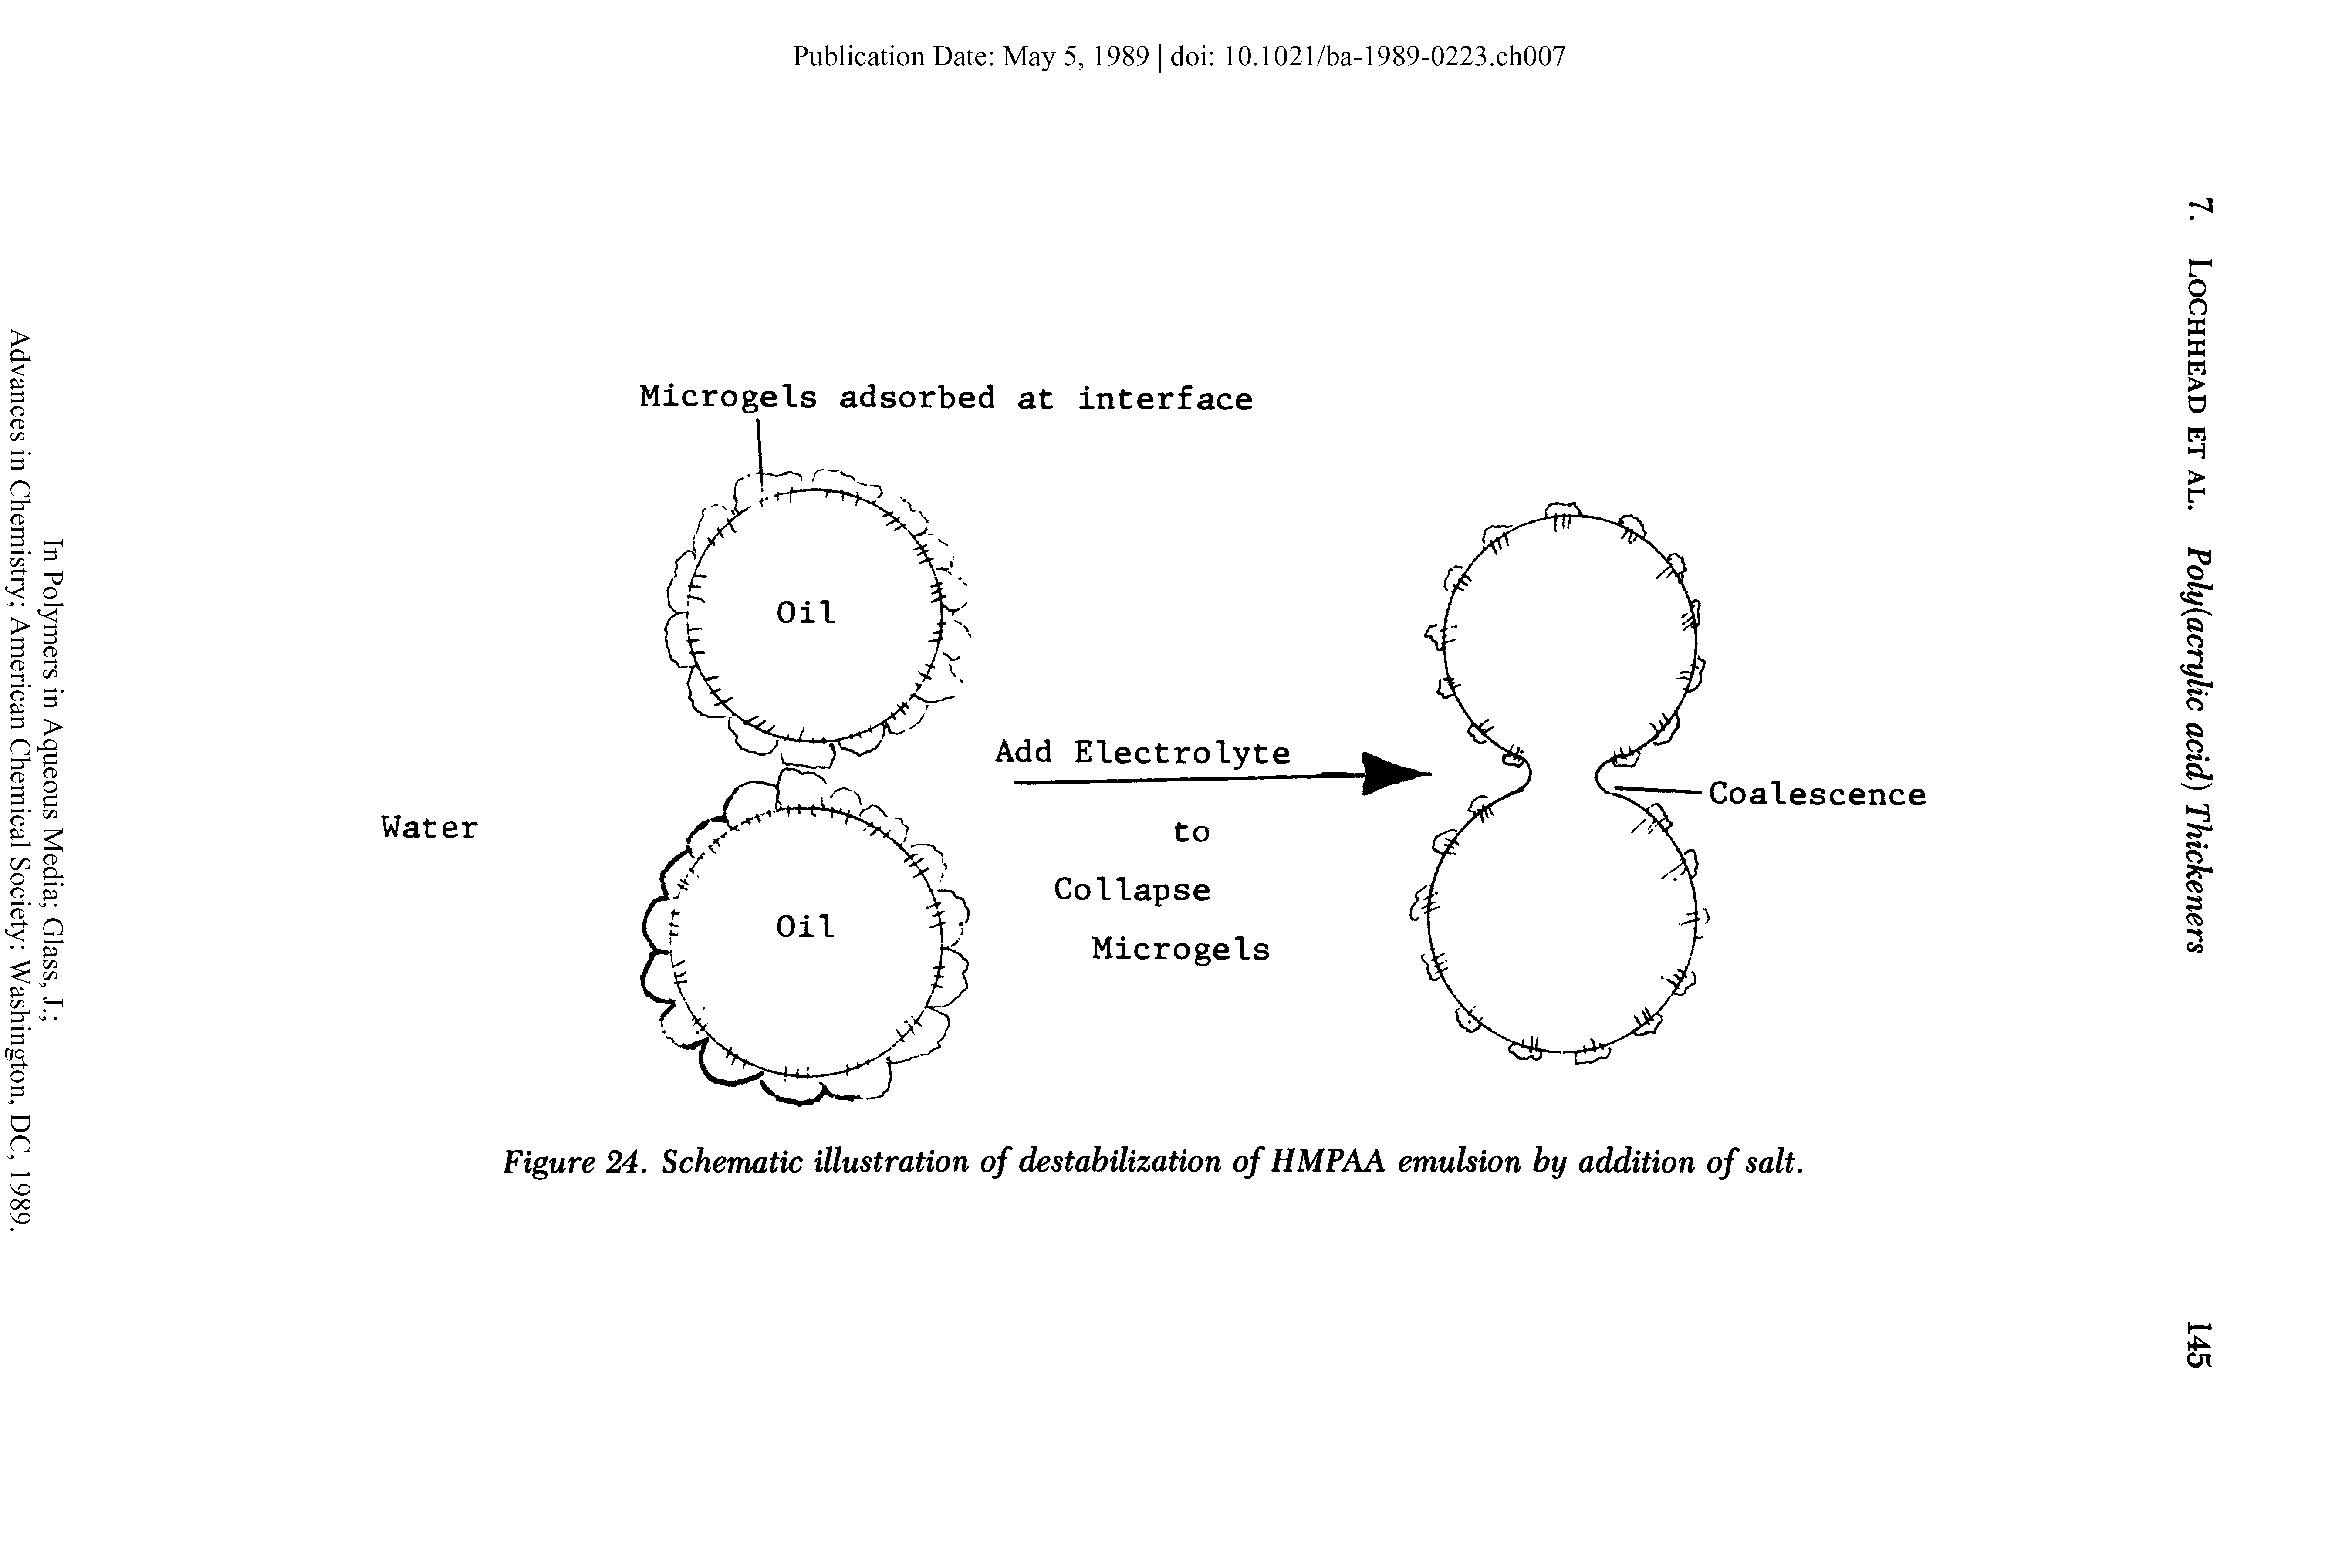 Figure 24. Schematic illustration of destabilization of HMPAA emulsion by addition of salt.